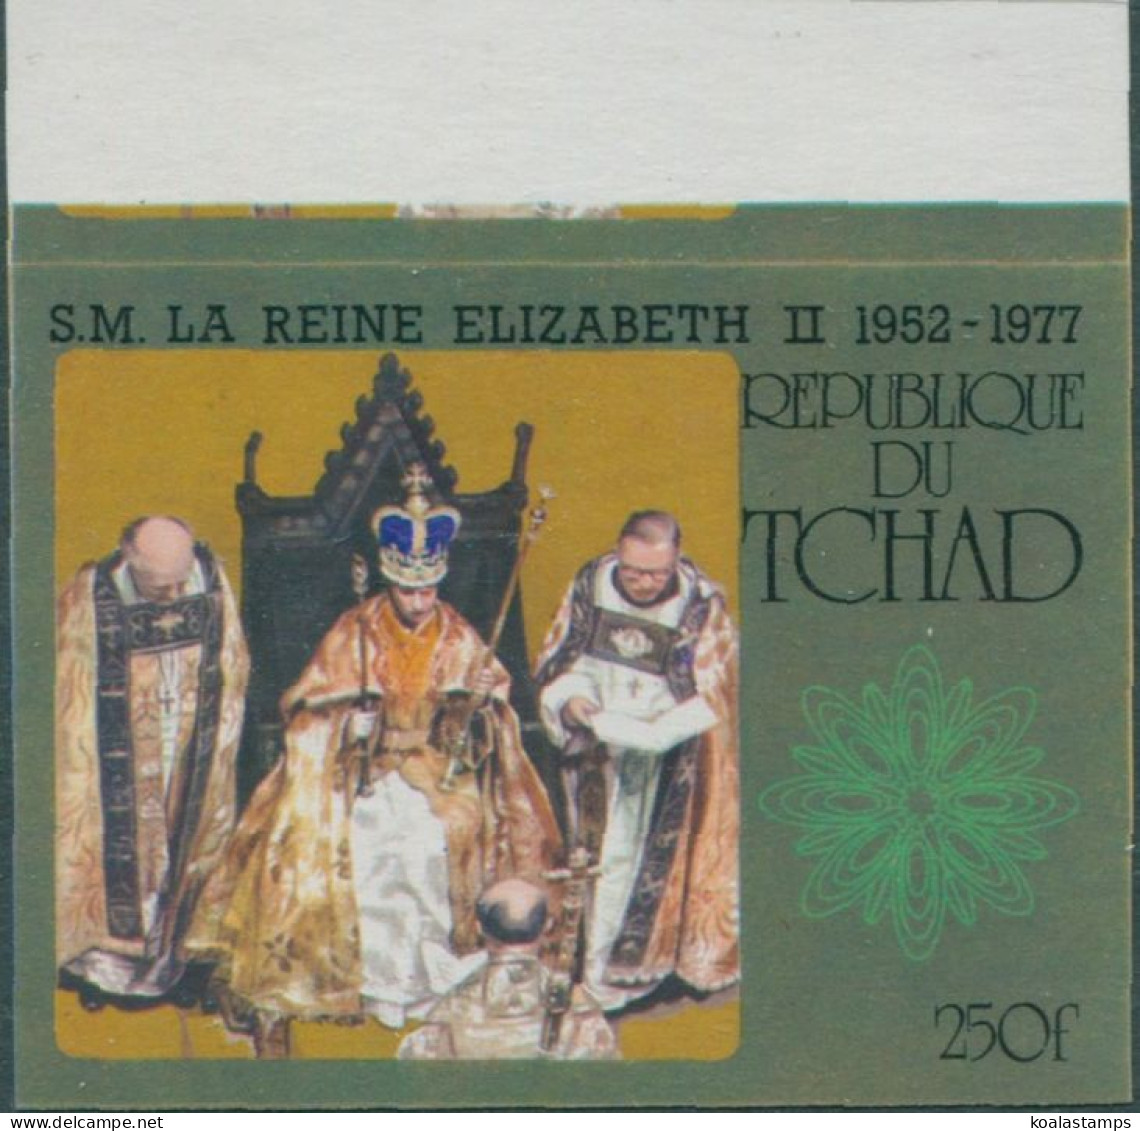 Chad 1977 SG493a 250f QEII Accession To Throne Imperf MNH - Tchad (1960-...)